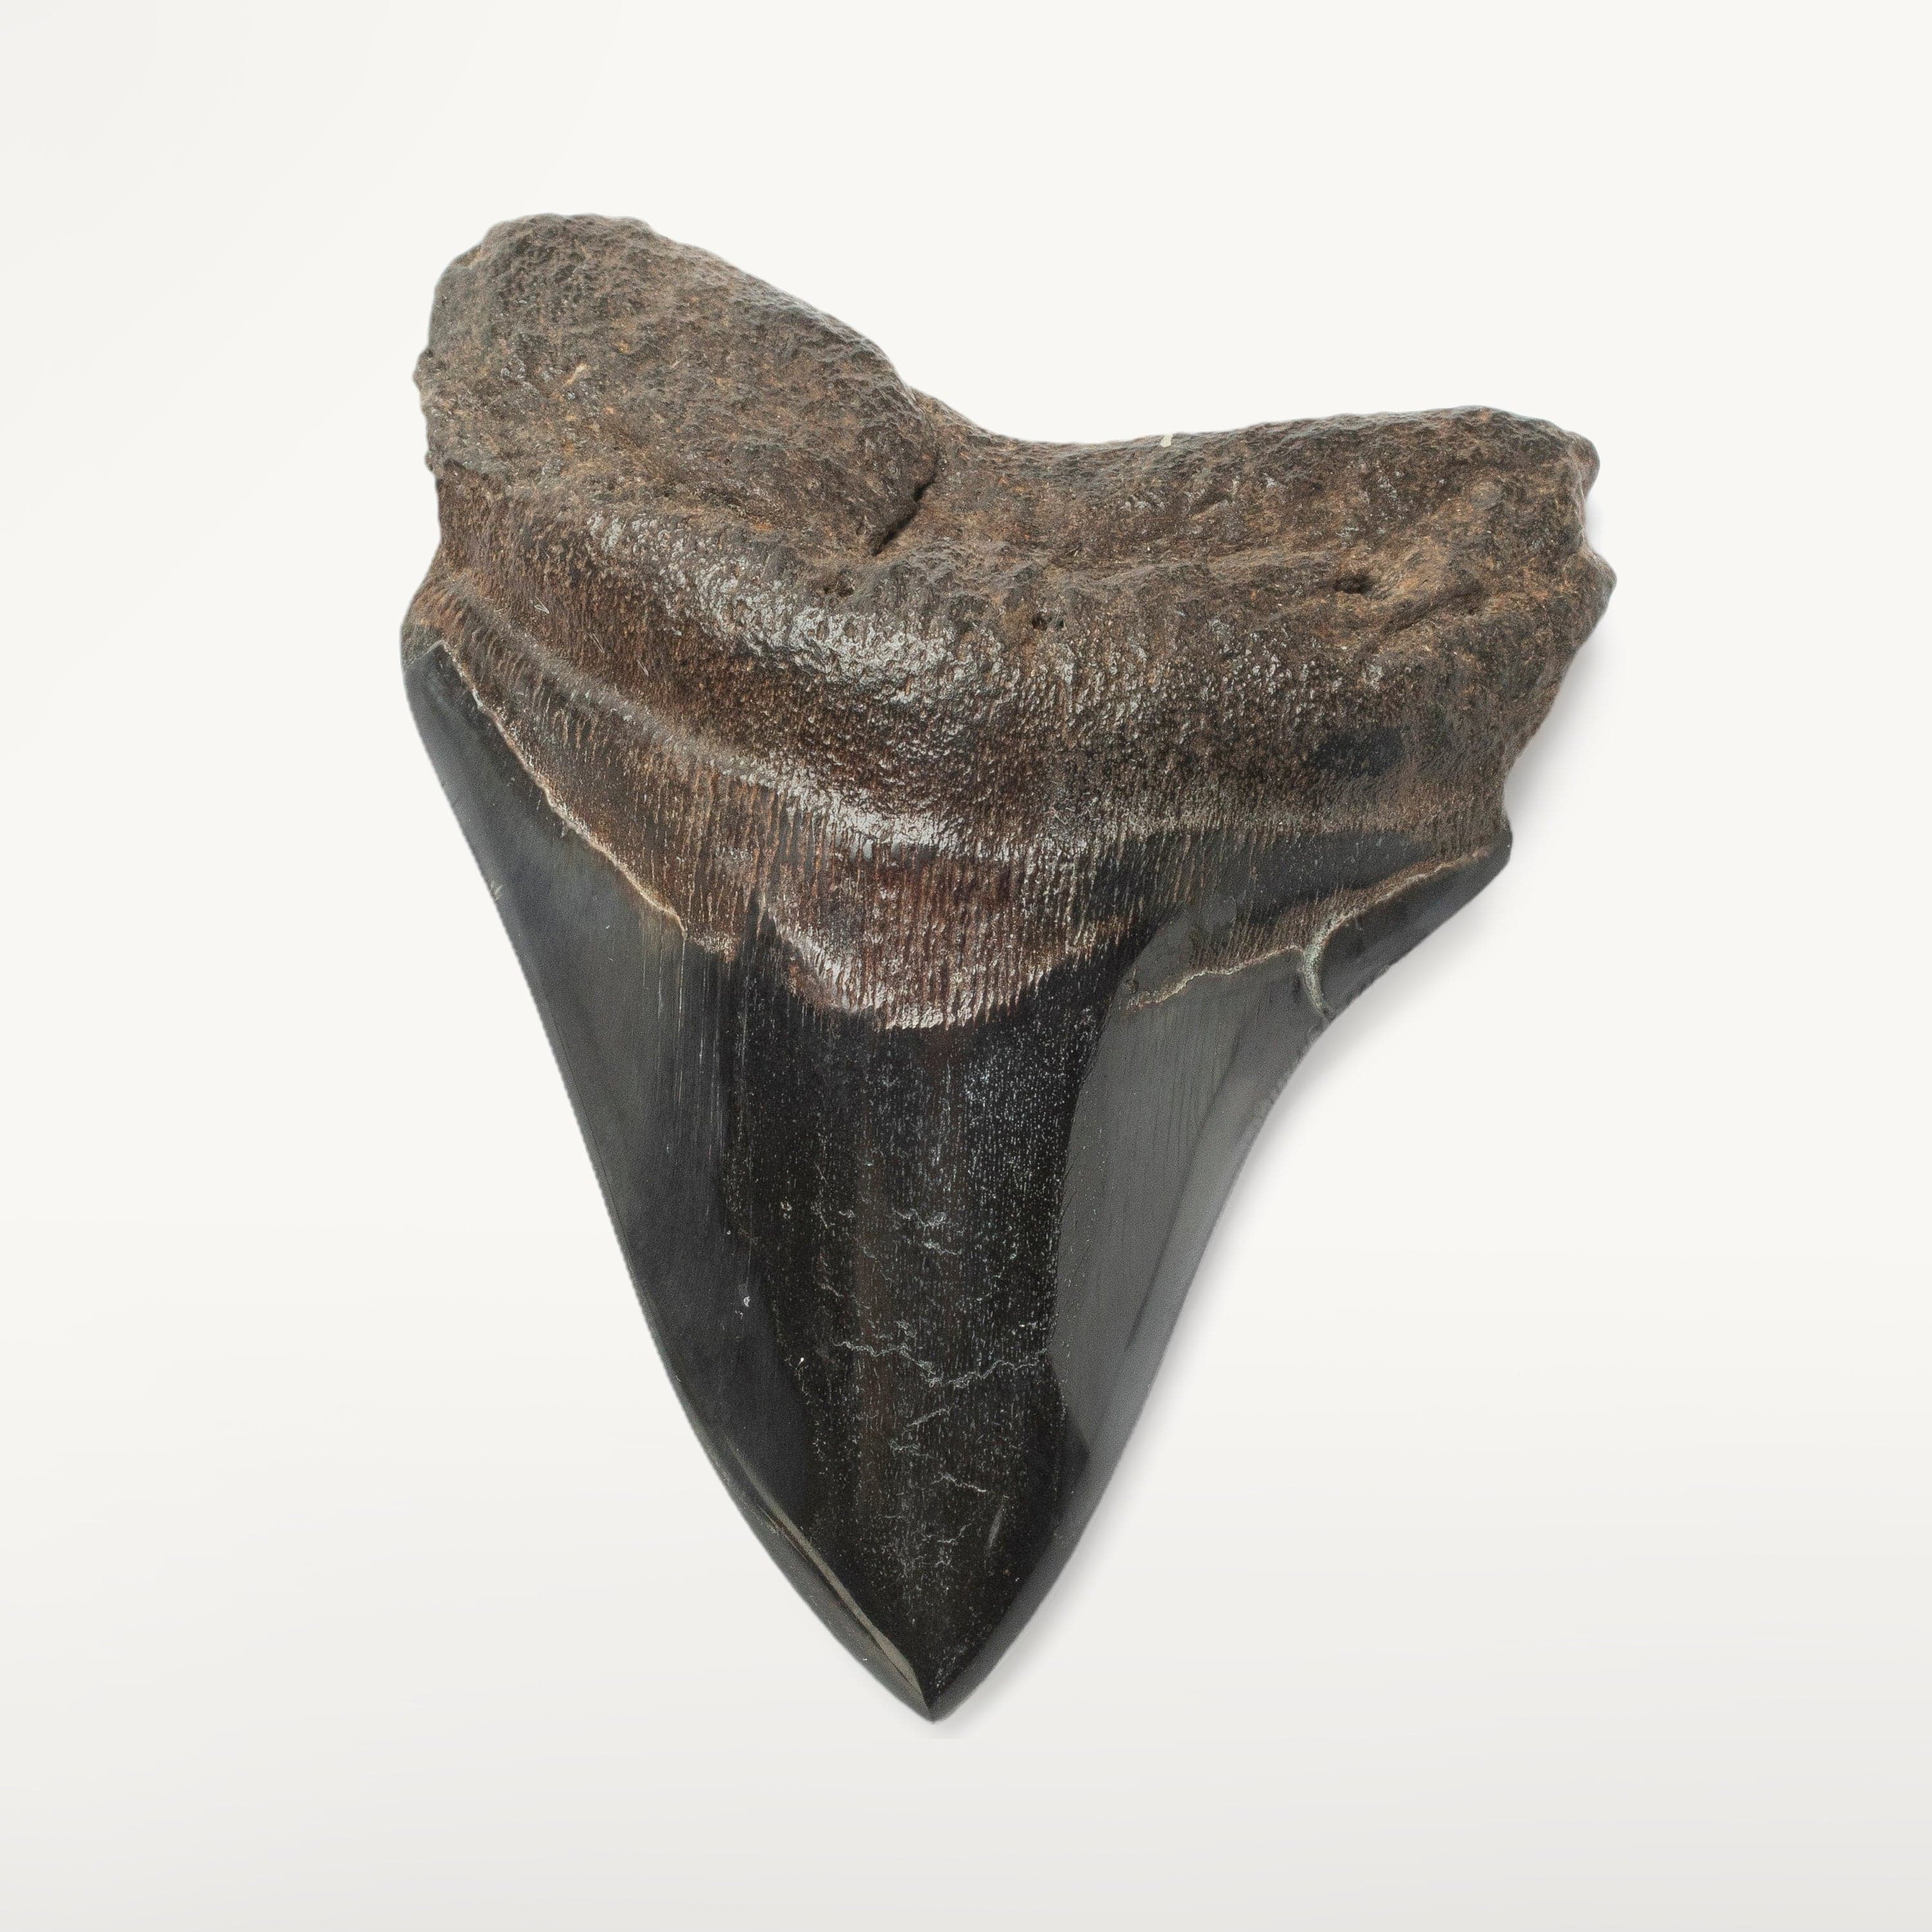 Kalifano Megalodon Teeth Megalodon Tooth from South Carolina - 4.1" ST2000.120